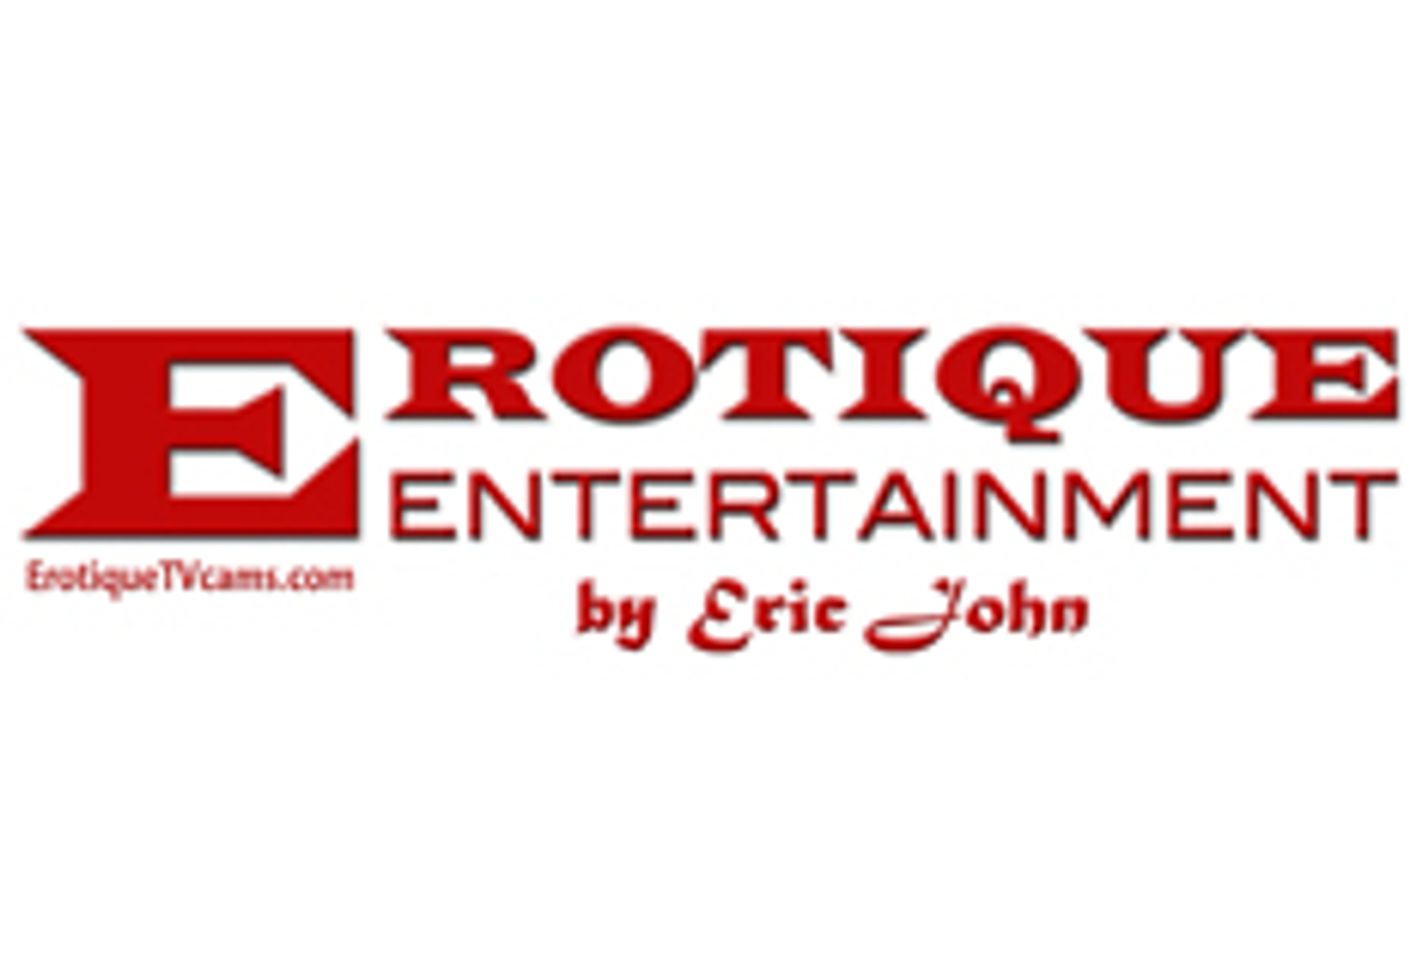 Erotique Entertainment Offers Feature Solo Shows During Production Moratorium